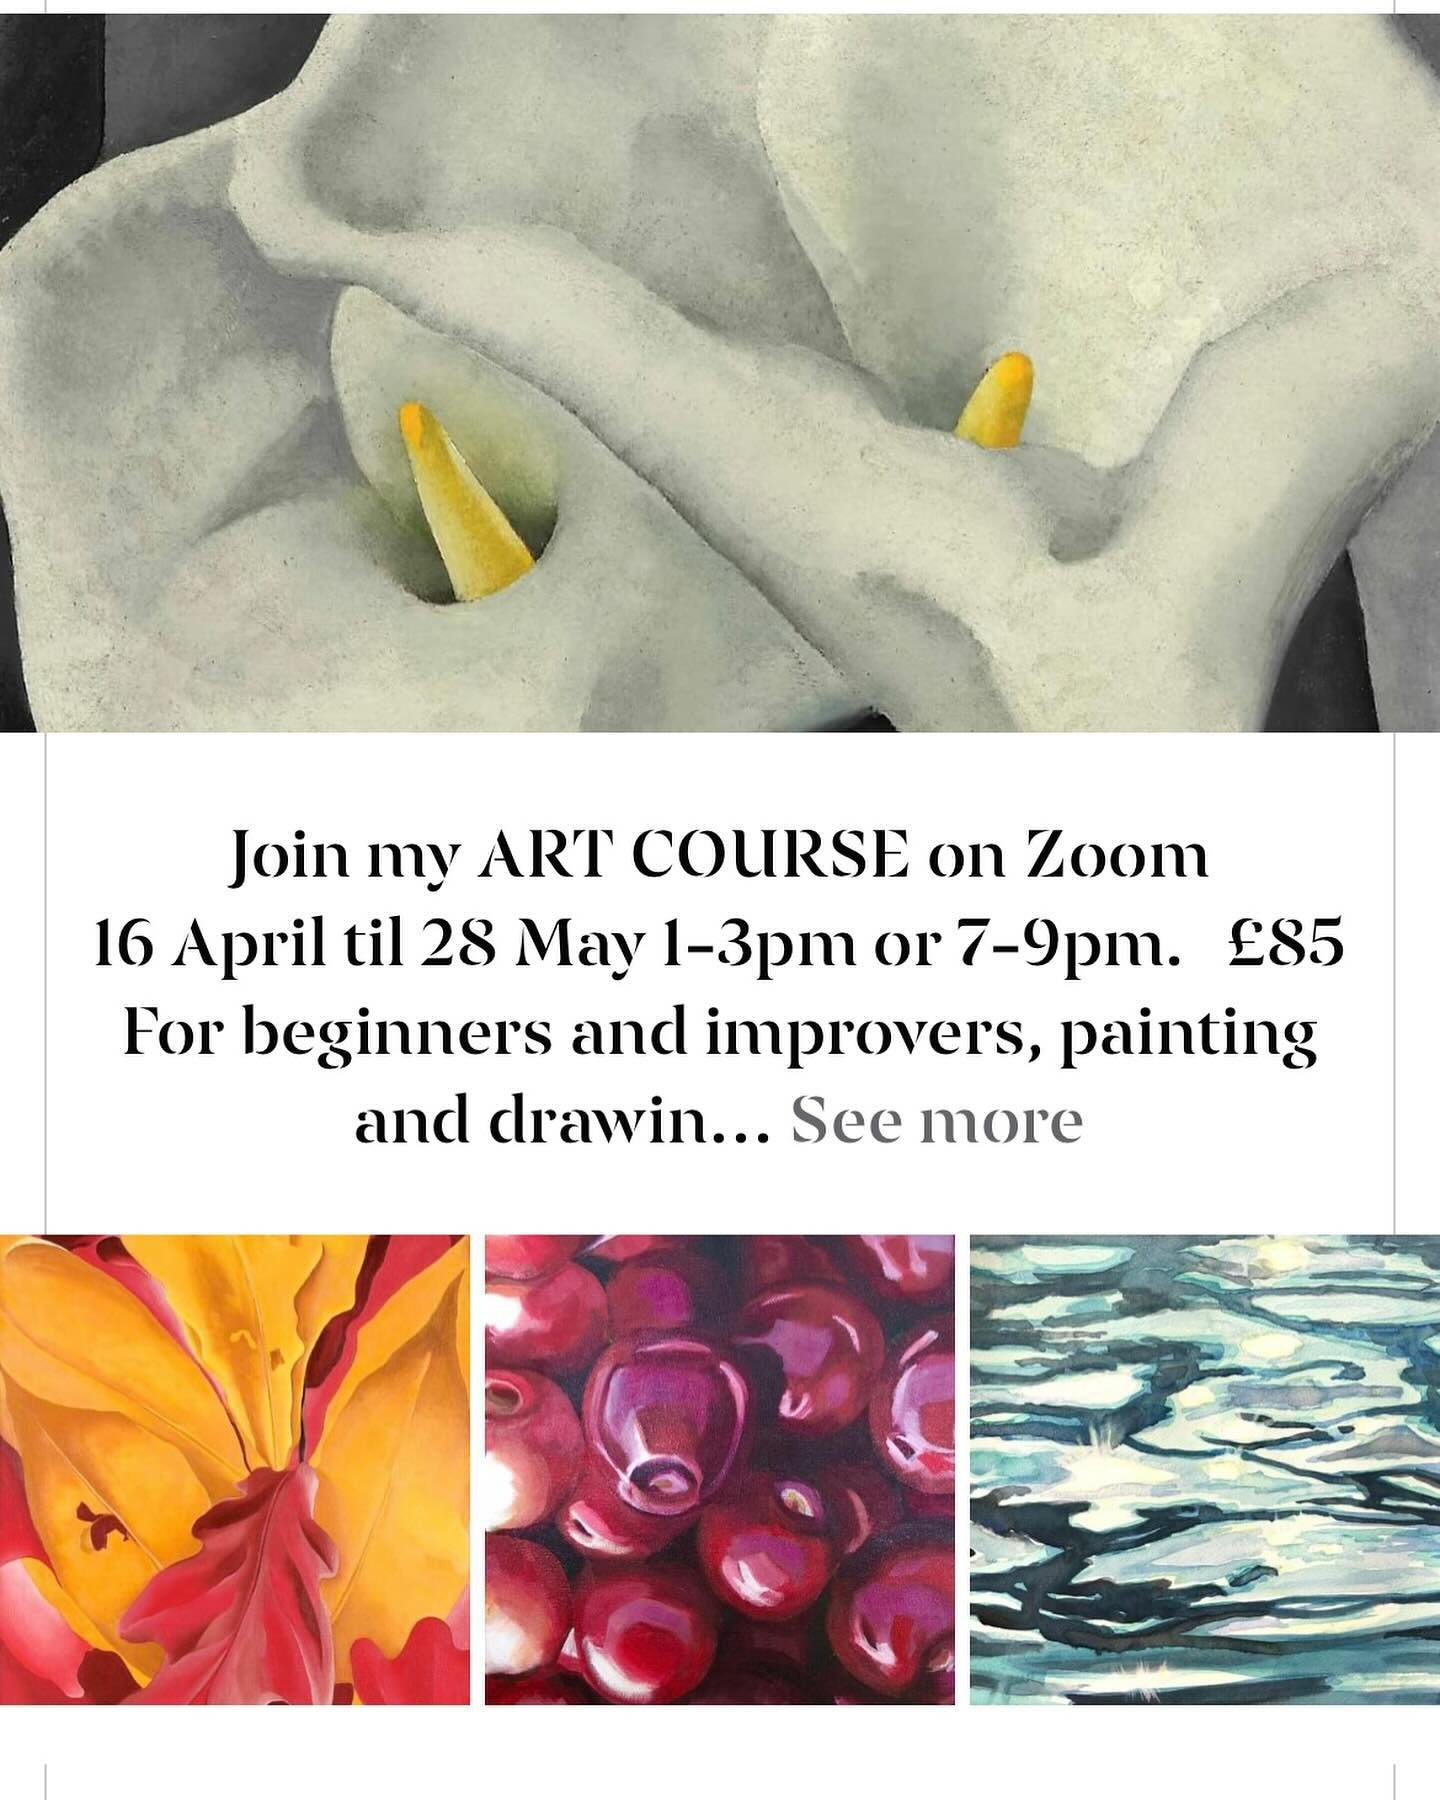 Join my Zoom are class. Open to all. #artlessons #art #artclass #learntopaint #yorkartist #onlineart #zoomart #zoomartclass #artcourse #learning